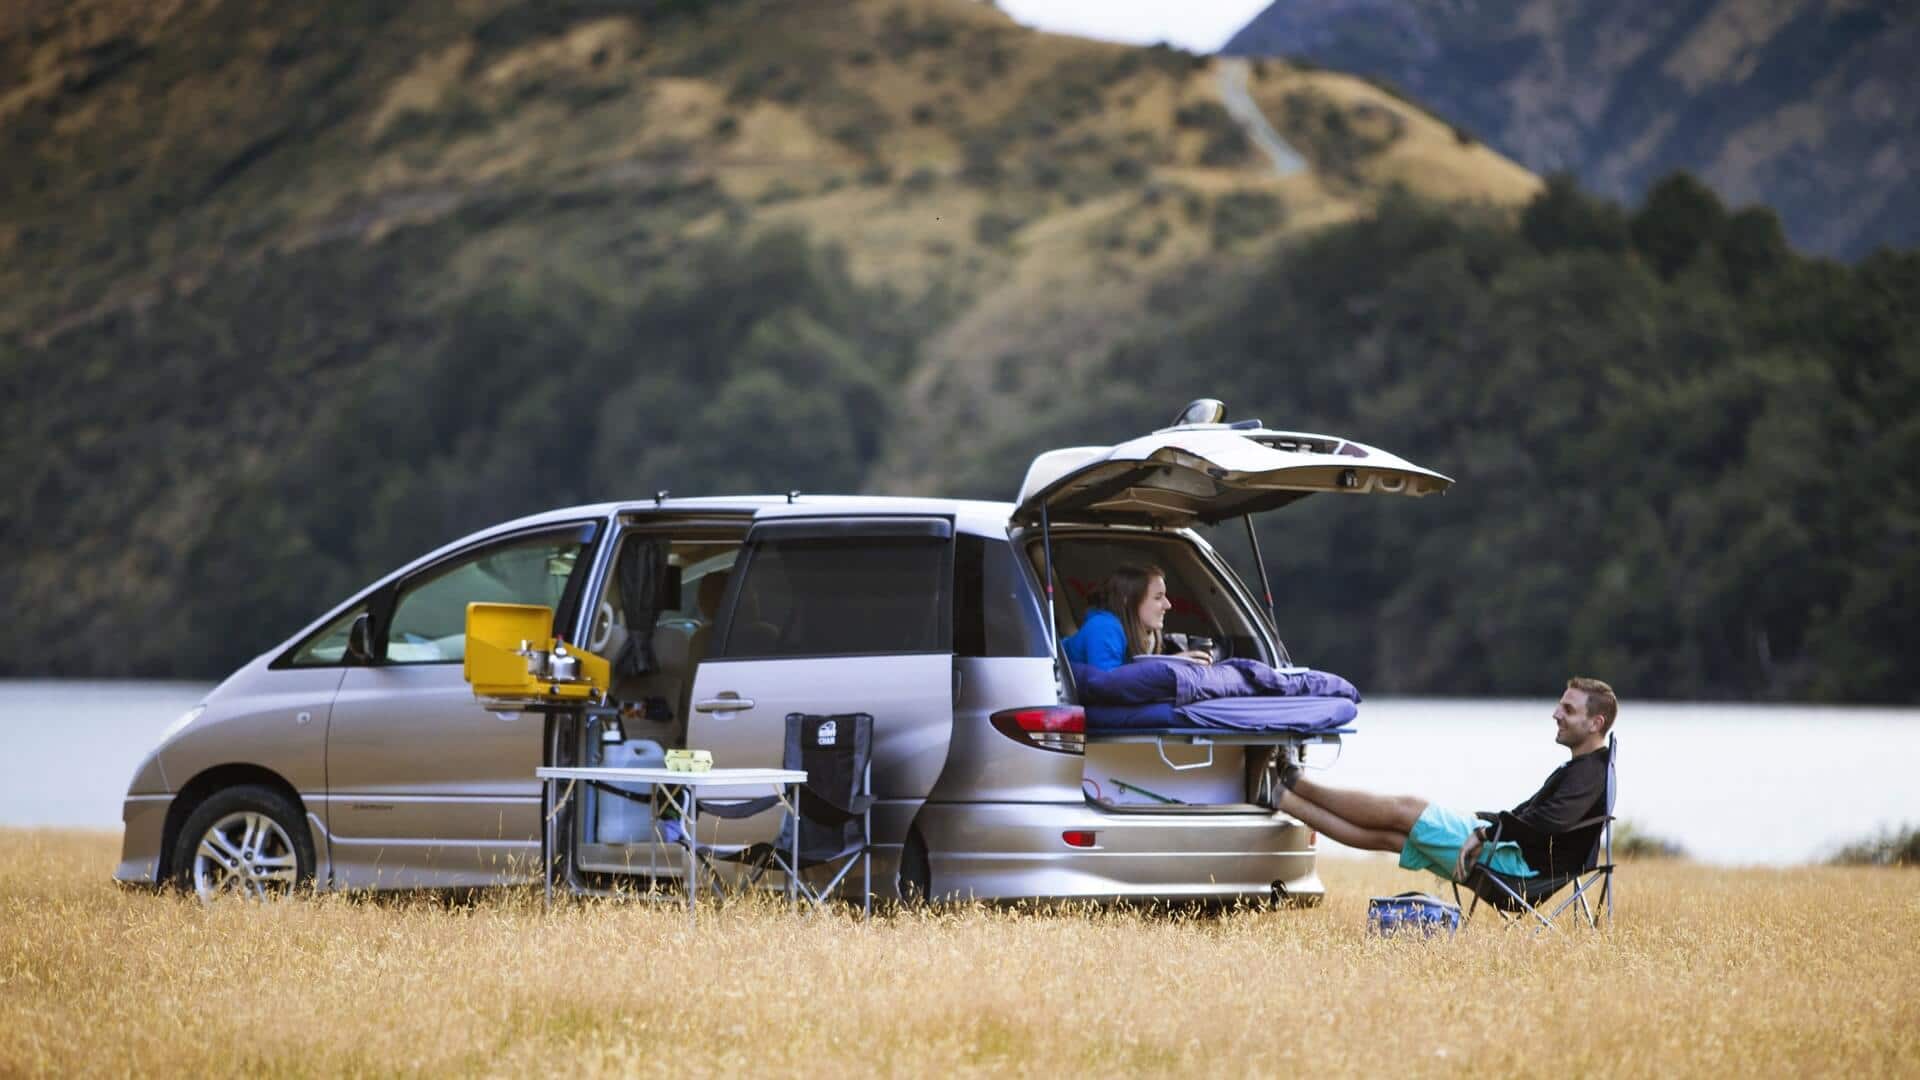 Camping in Australien mit Campervan am See